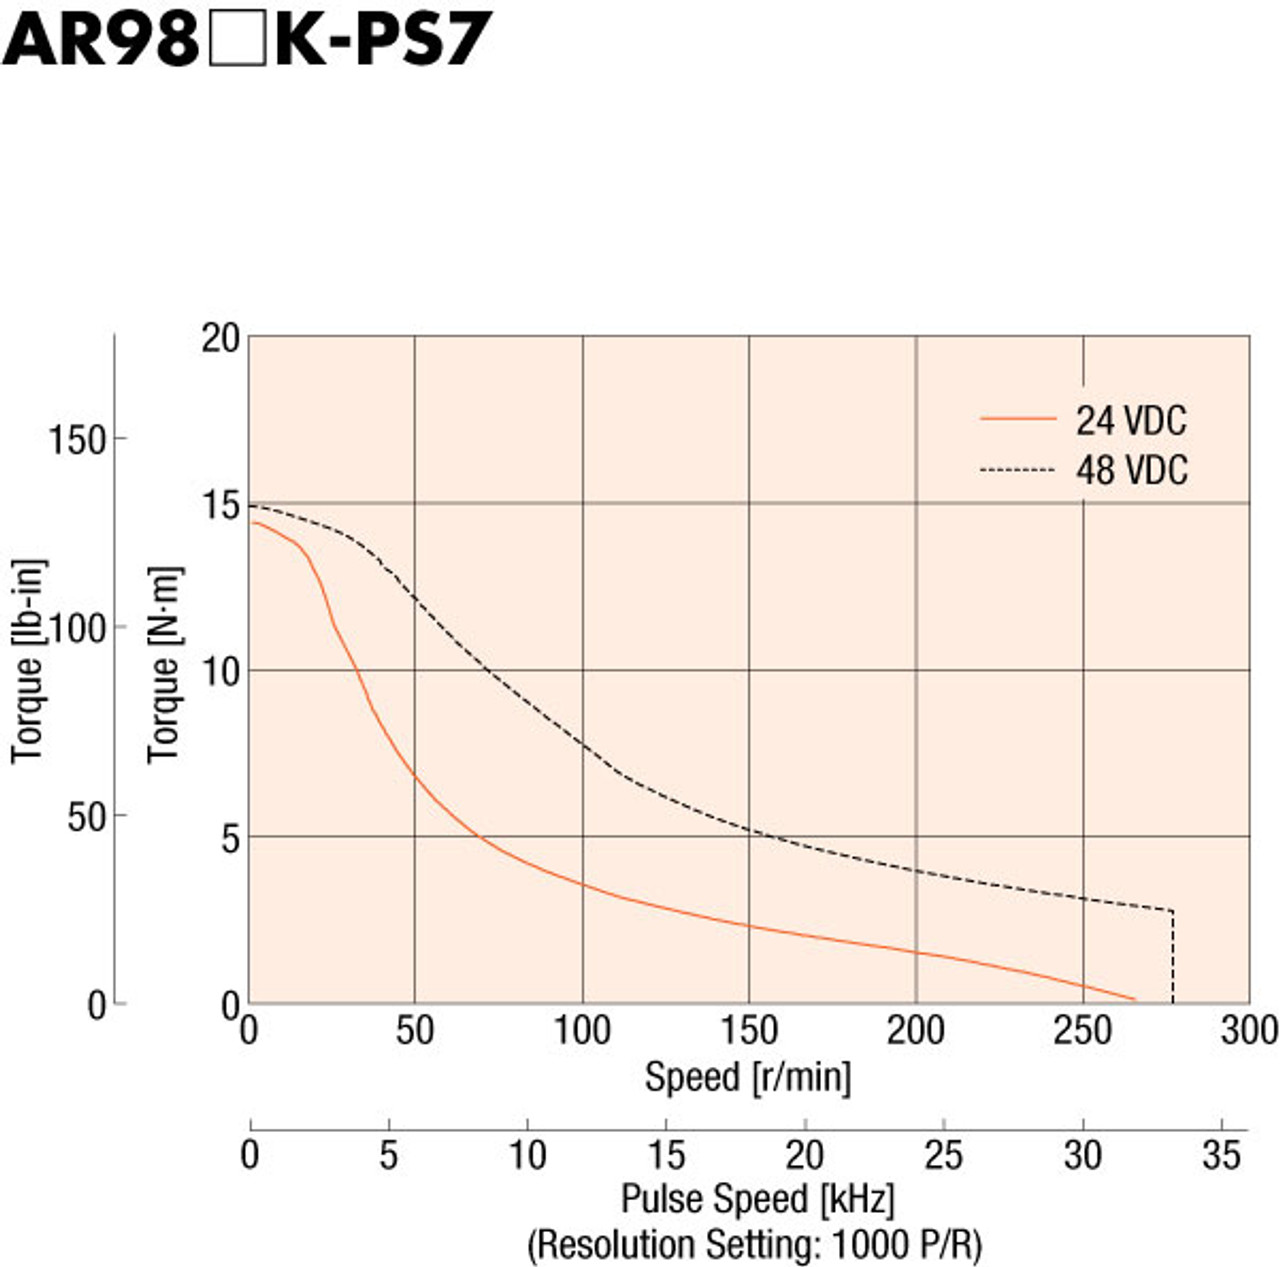 AR98MK-PS7-3 - Speed-Torque